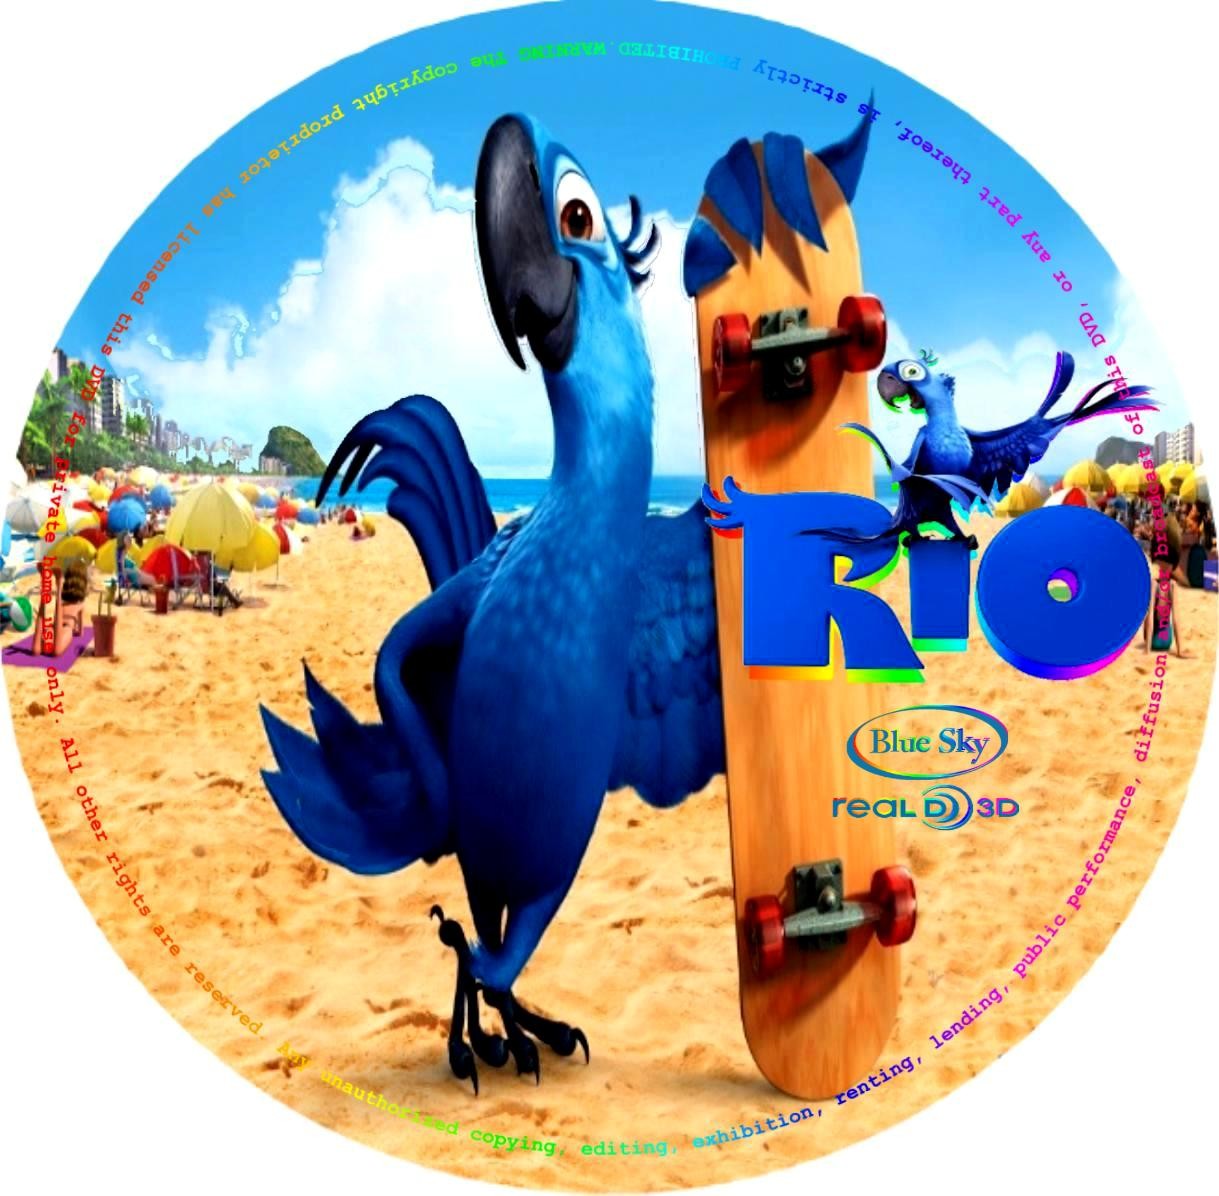 Covers Box Sk Rio 11 High Quality Dvd Blueray Movie